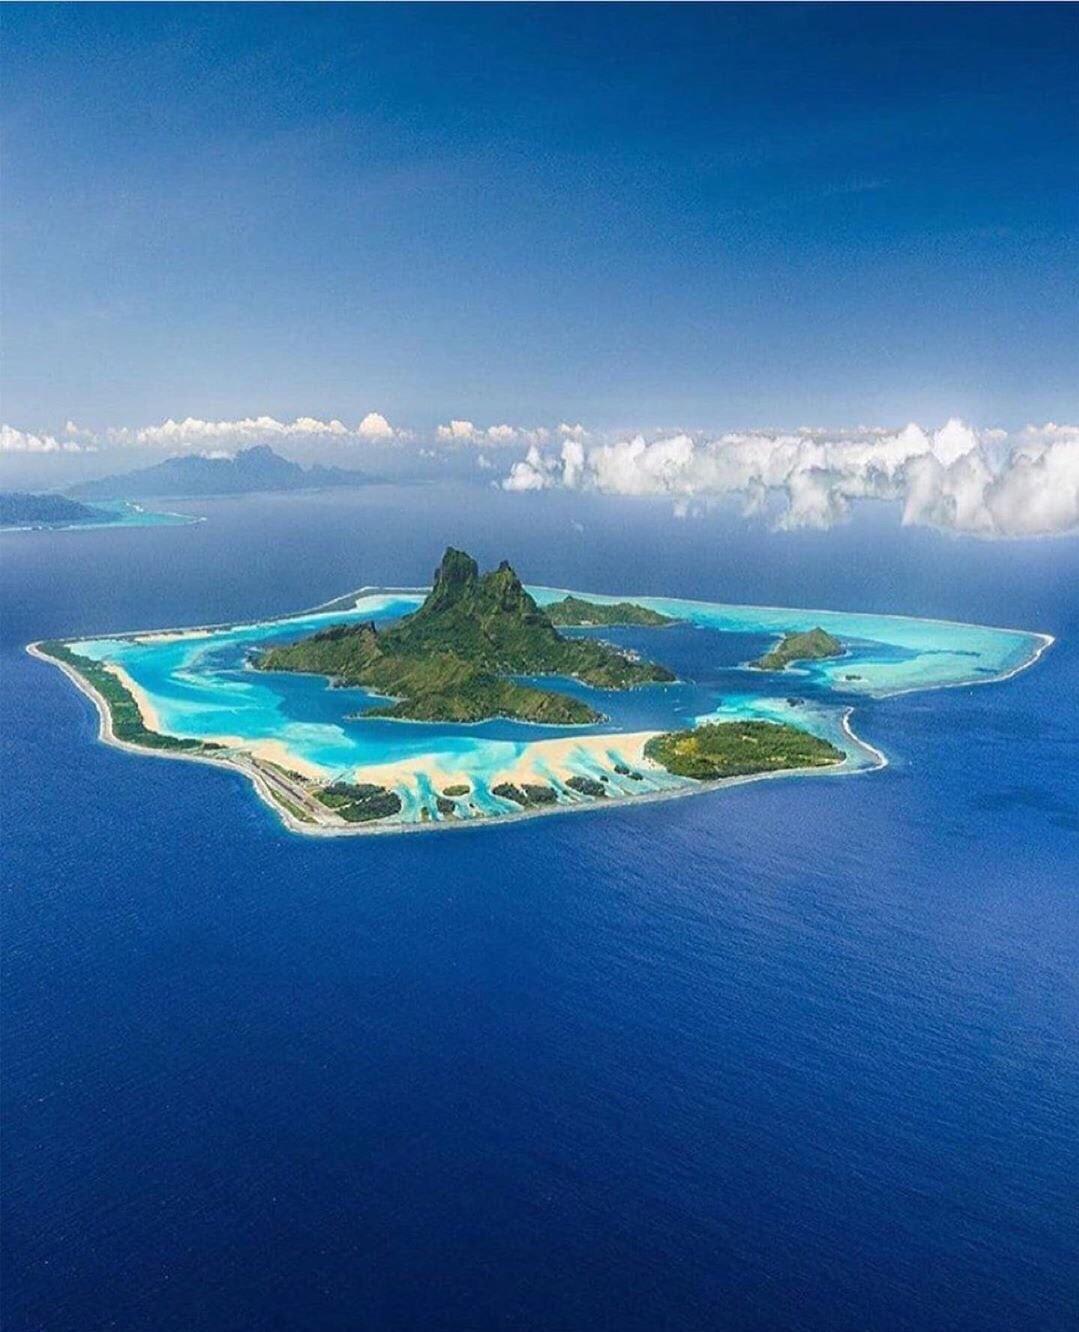 Bora Bora sure is beautiful